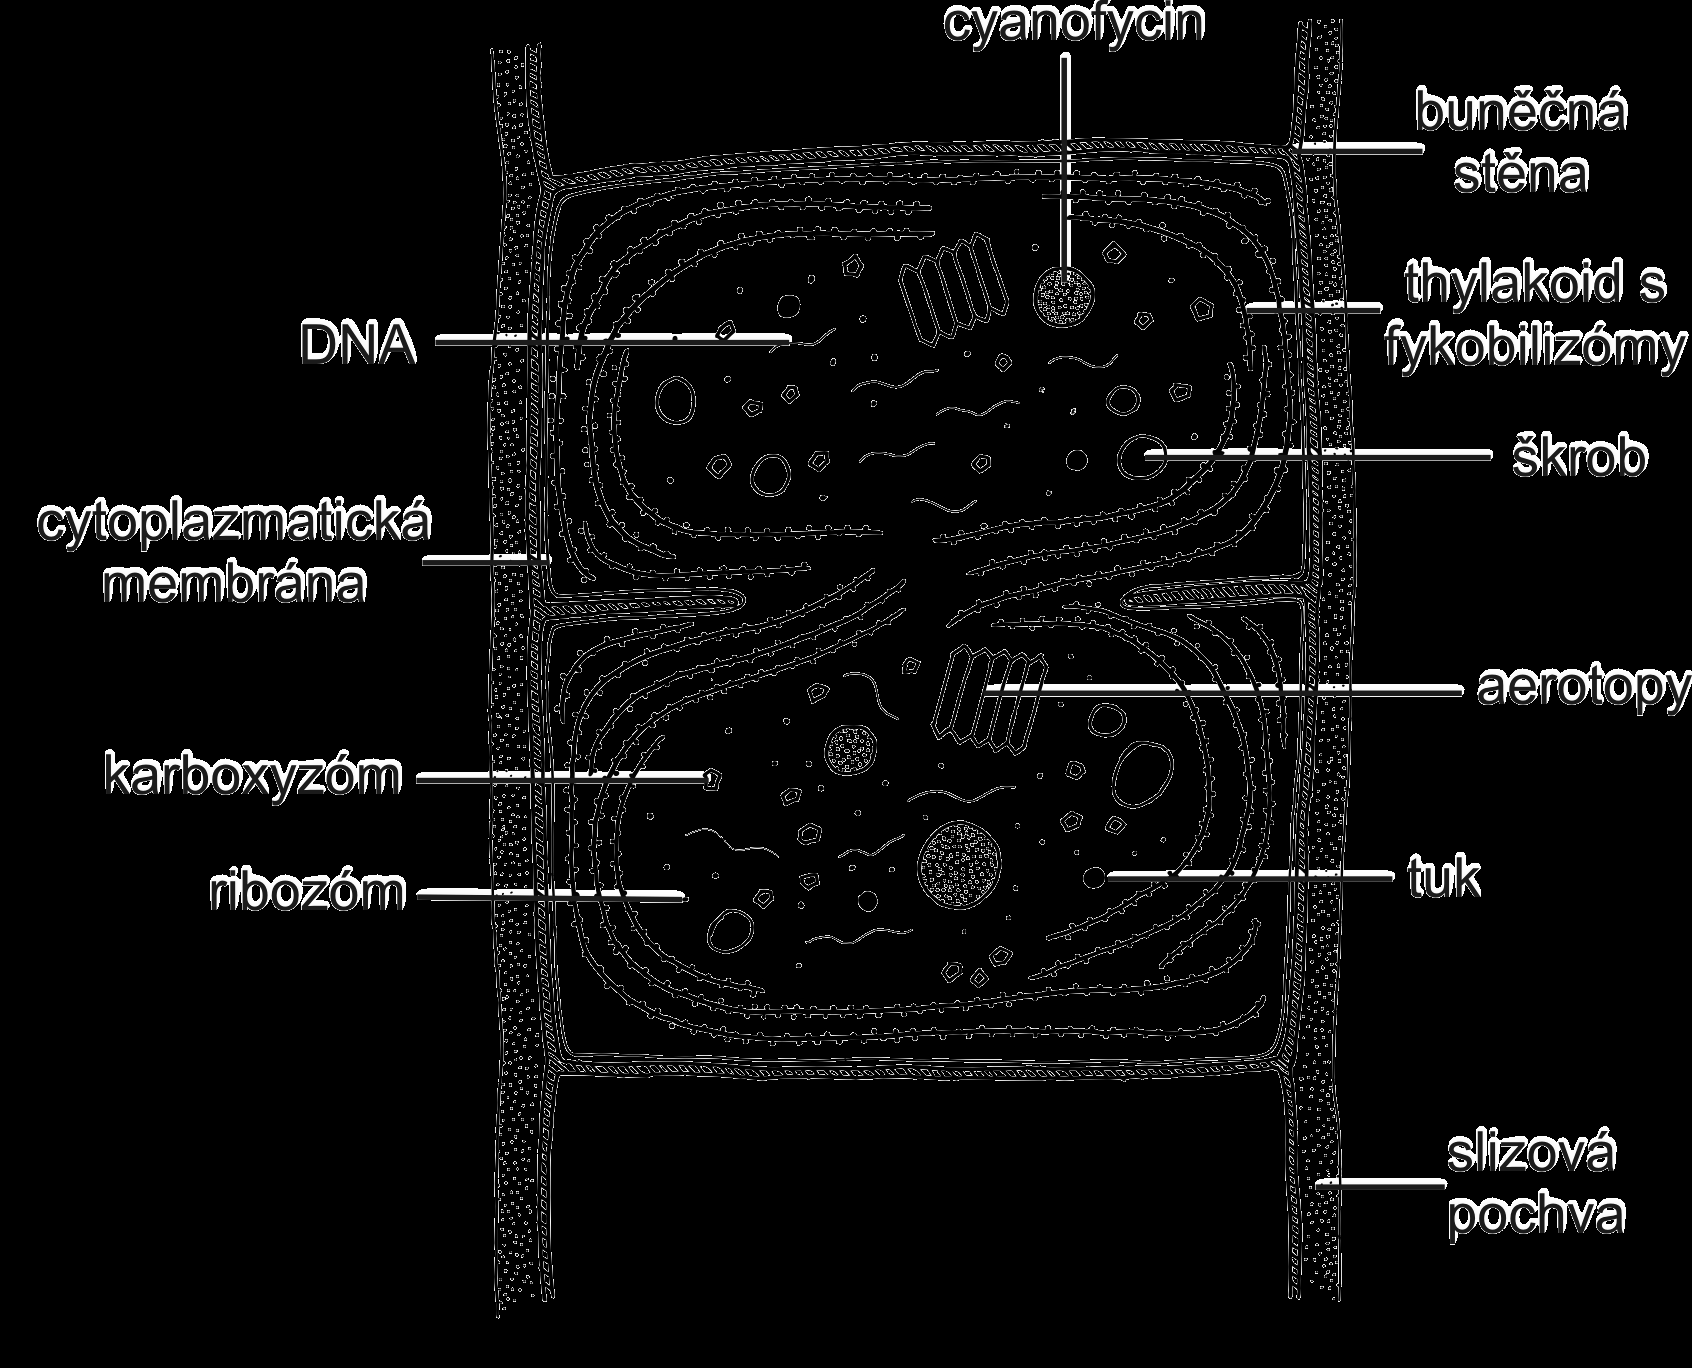 DNA Cytoplasmatická